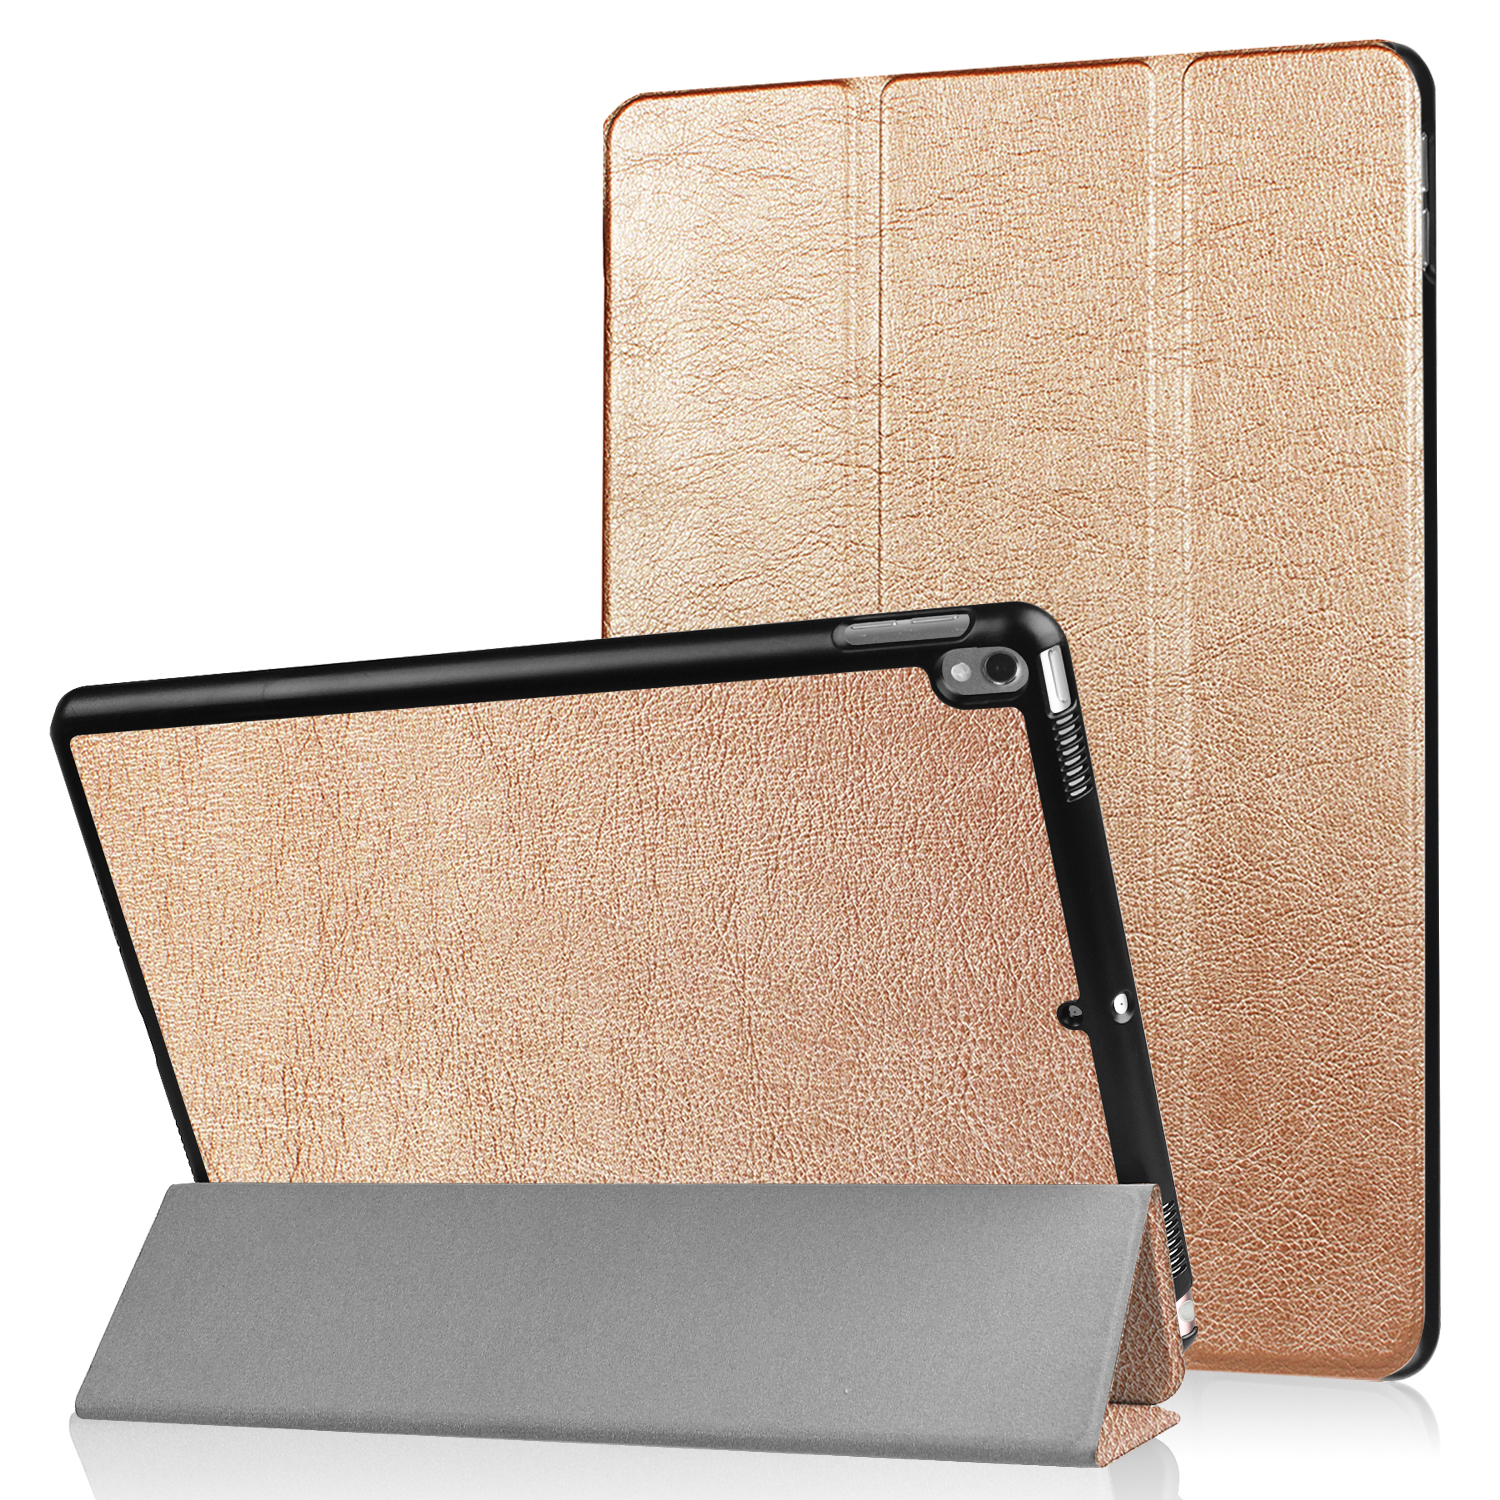 LOBWERK Hülle Schutzhülle Bookcover für iPad Air 3 gold Kunstleder, Zoll Apple 2019 Pro 2017 iPad 10.5